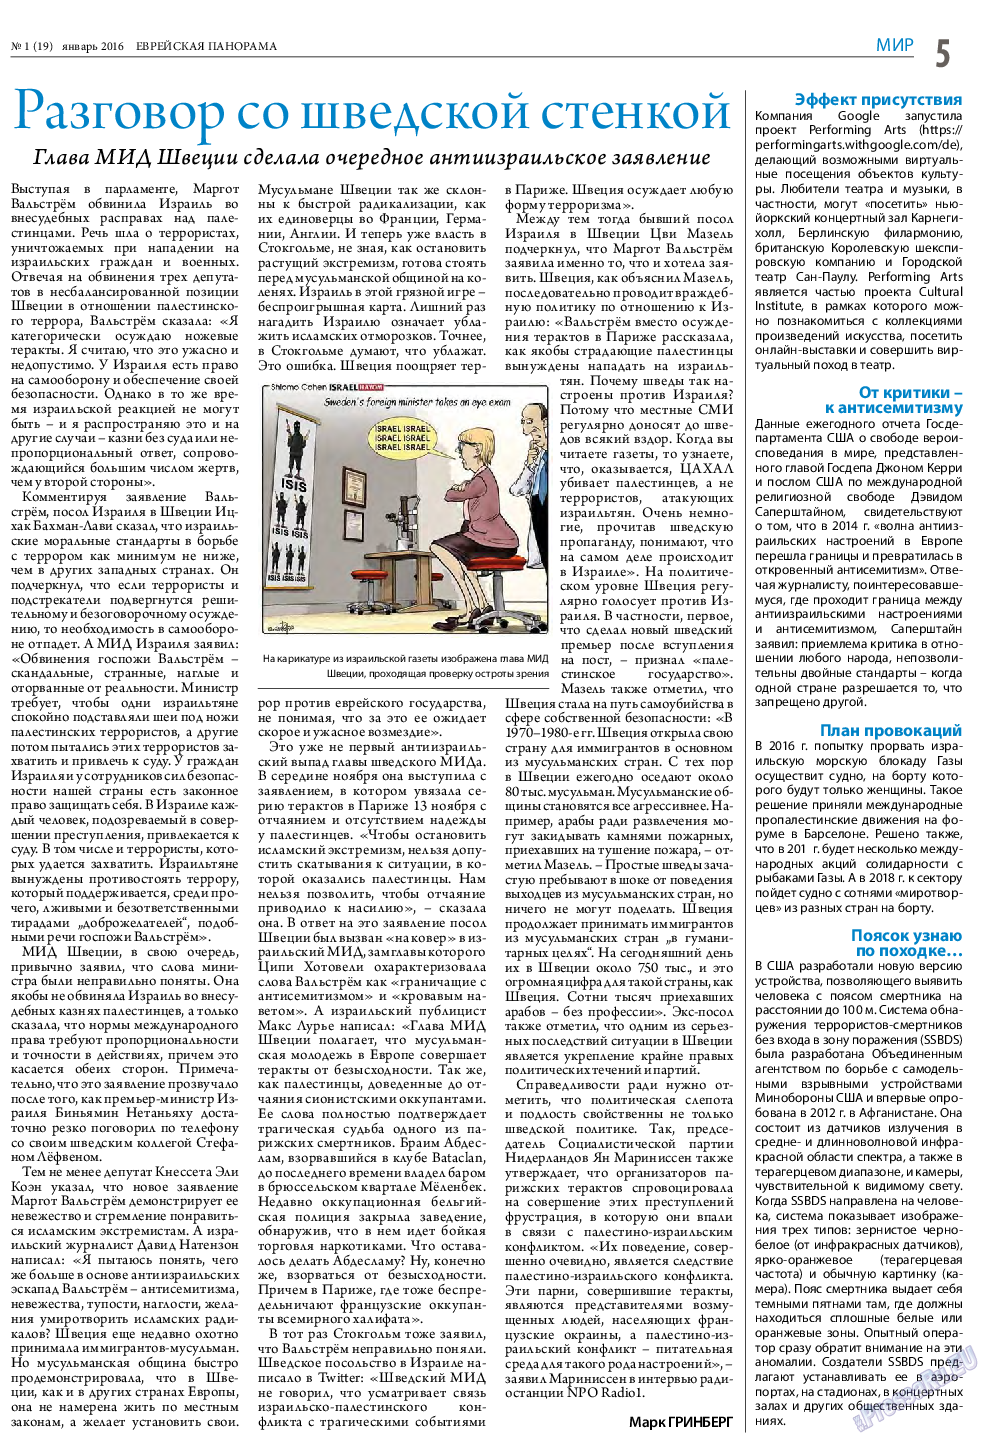 Еврейская панорама, газета. 2016 №1 стр.5